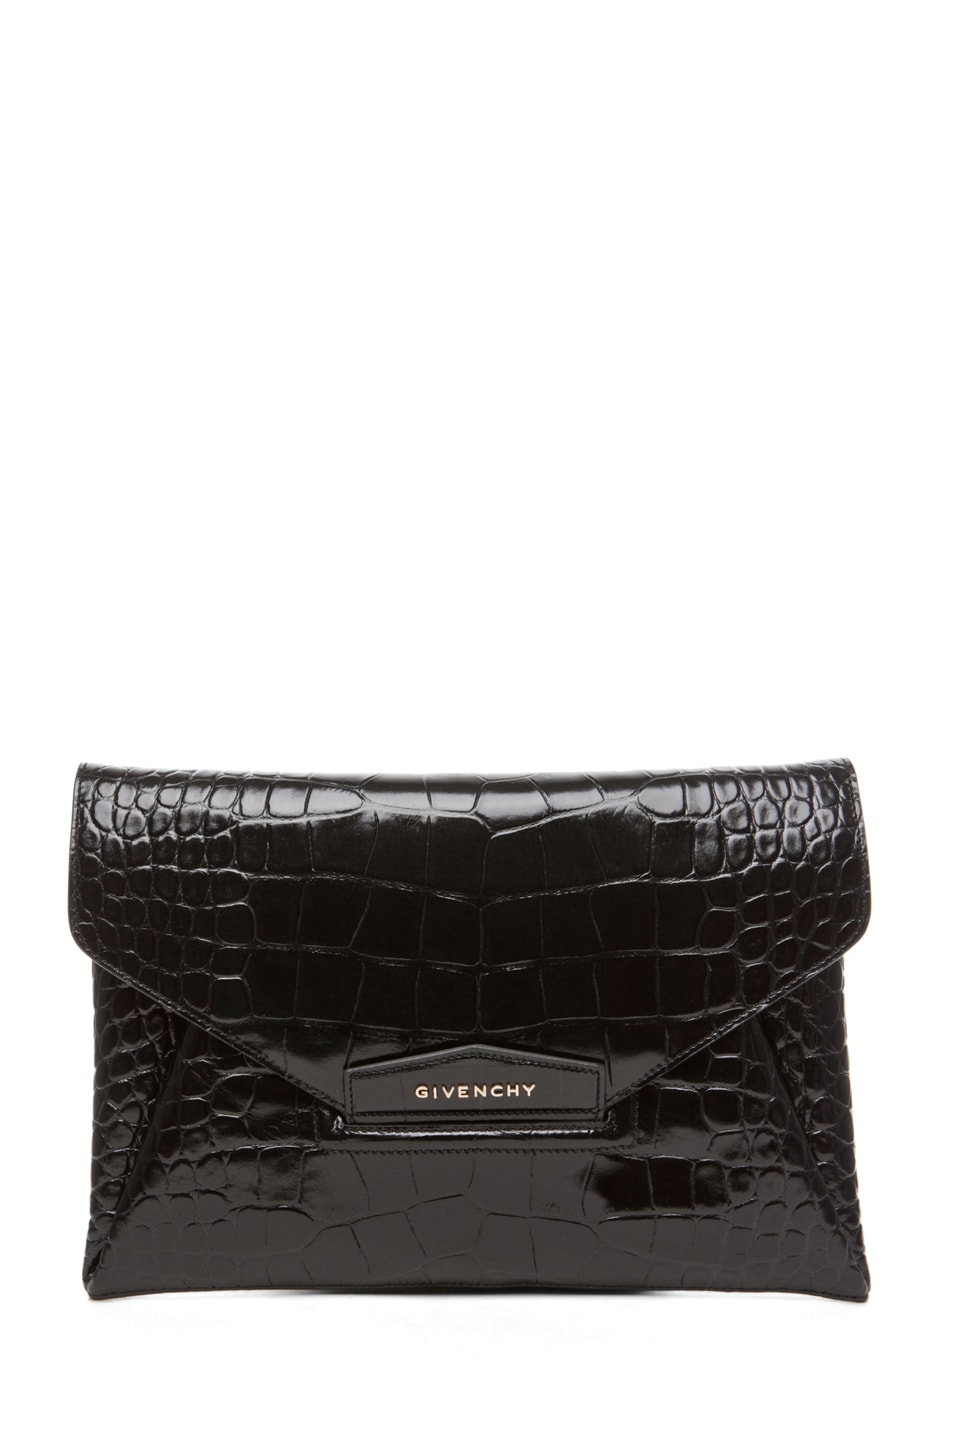 Image 1 of Givenchy Antigona Croc Envelope Clutch in Black